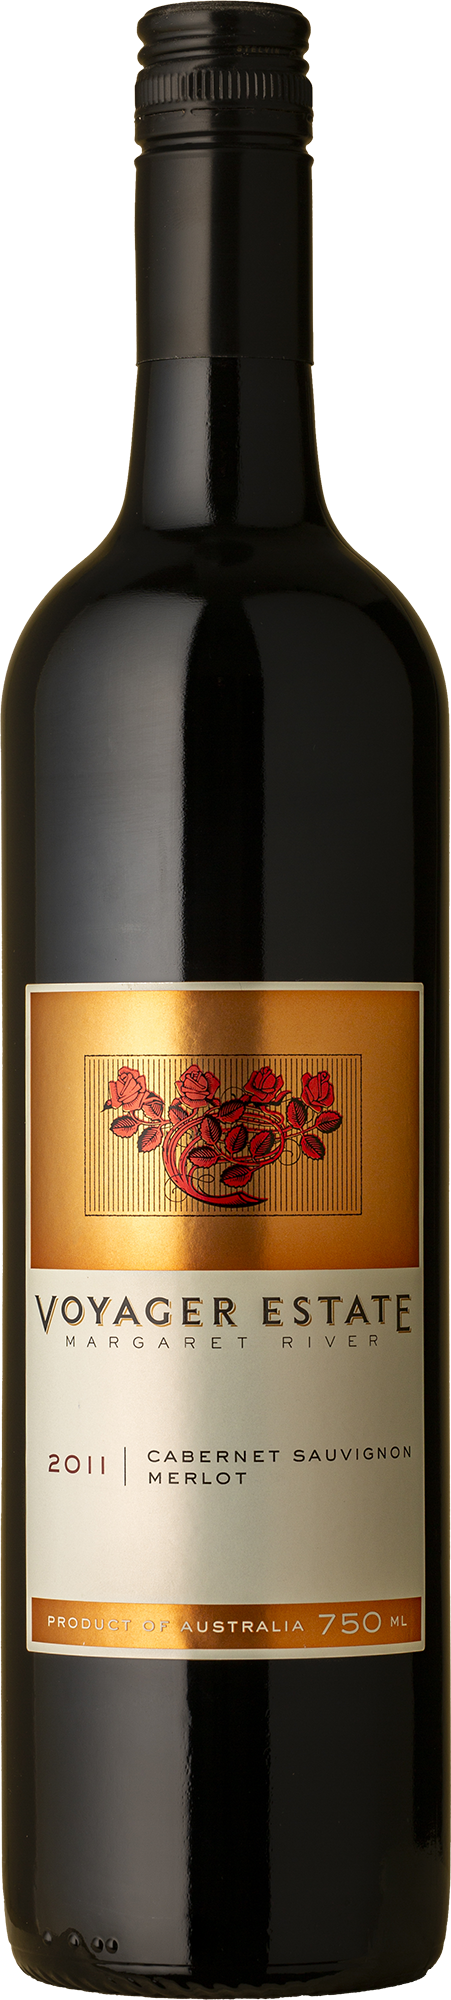 Voyager Estate - Cabernet Sauvignon / Merlot 2011 Red Wine